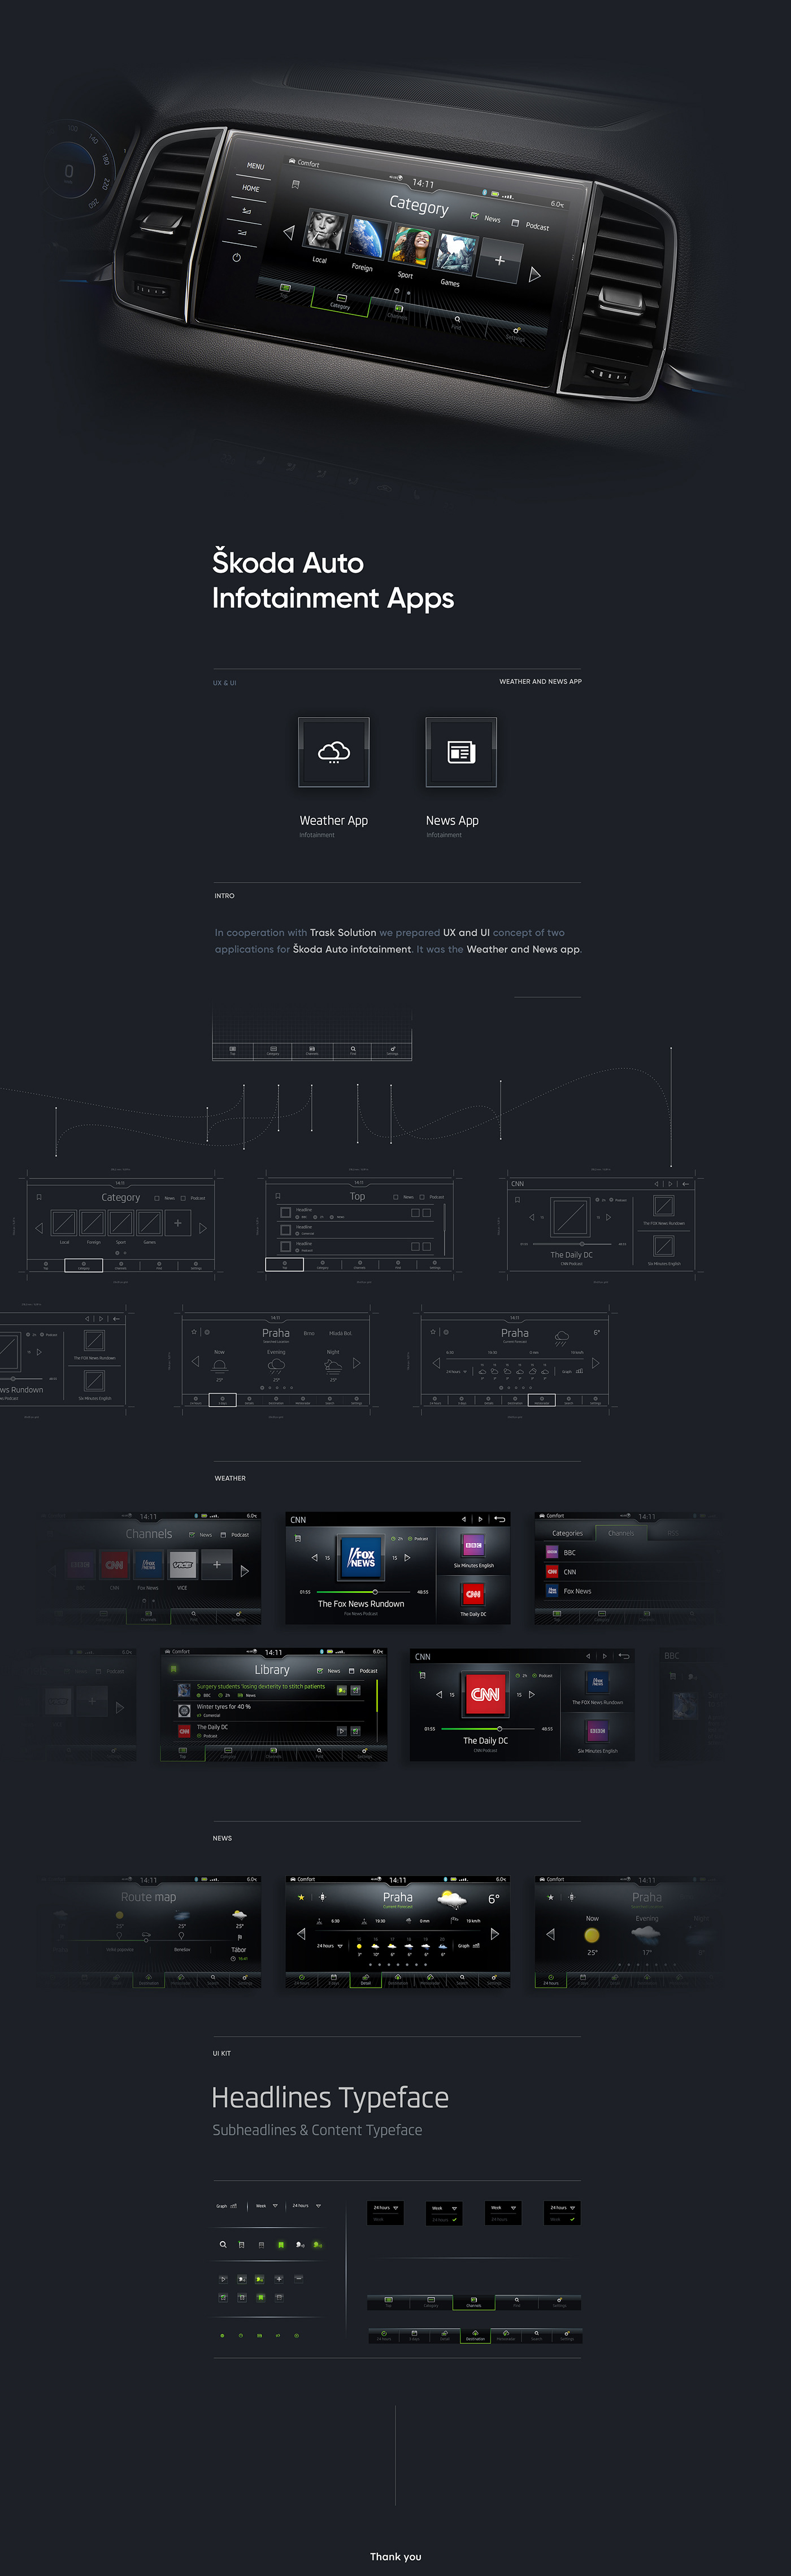 UX/XU Infotainment motion art direction  SKODA AUTO automotive   digital design app